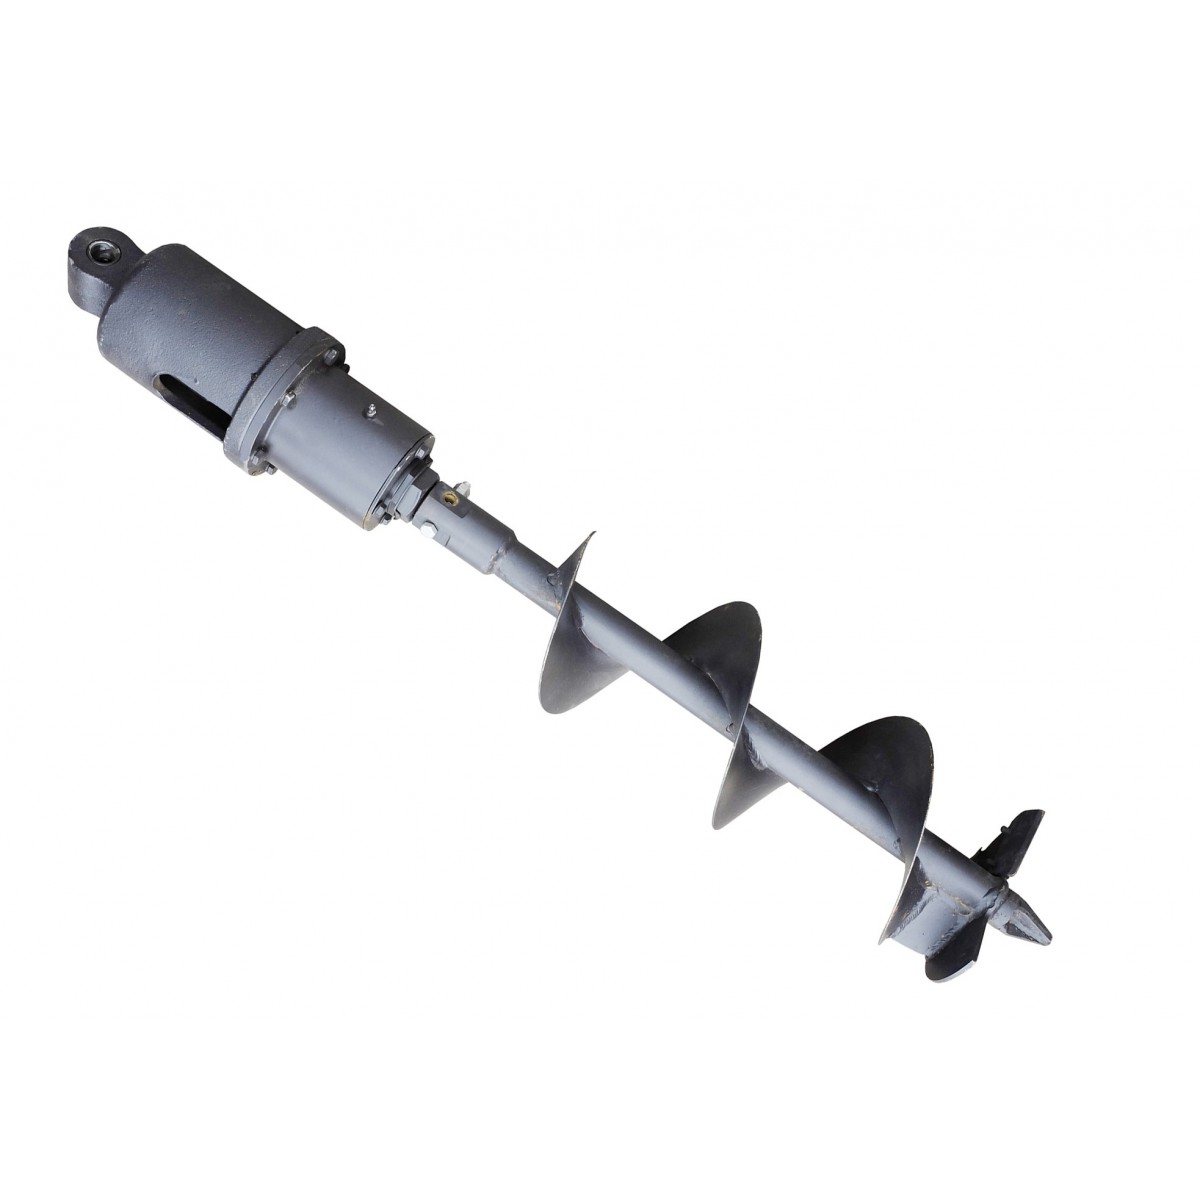 JBD-XN11 earth auger for Rhinoceros XN08 / XN12 mini excavator